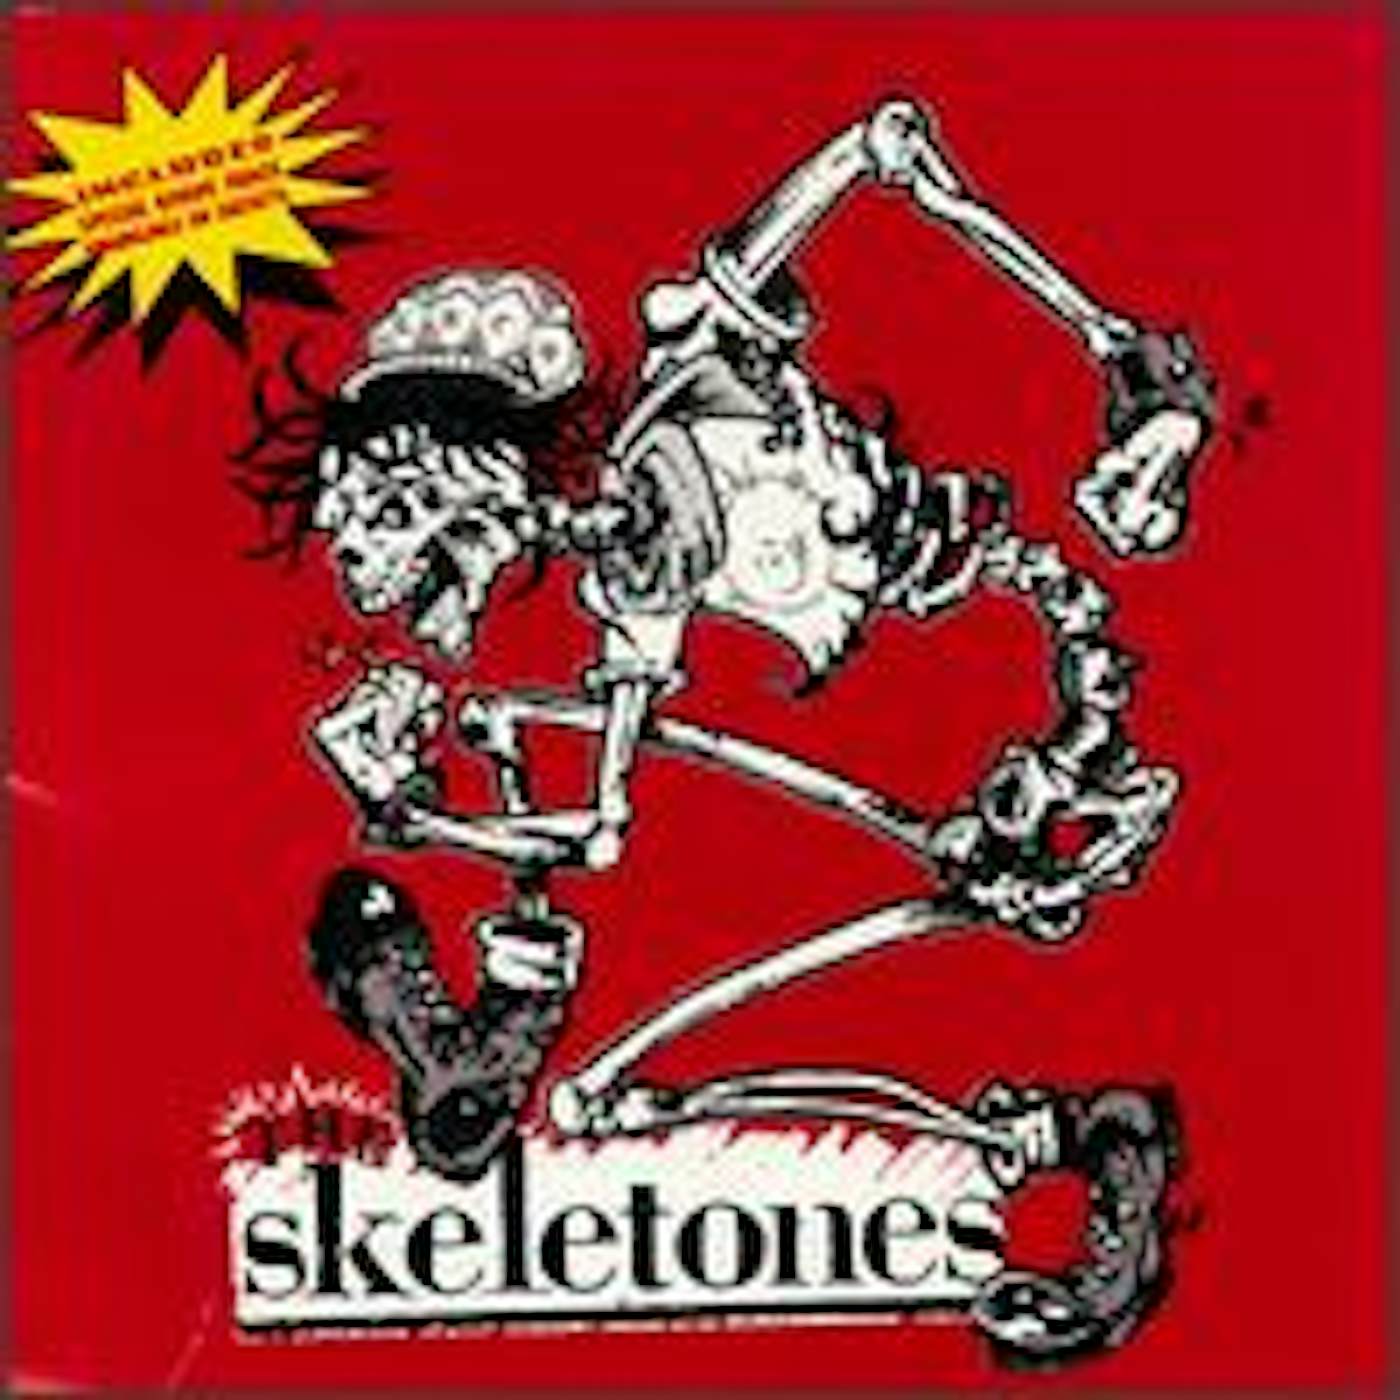 The Skeletones CD